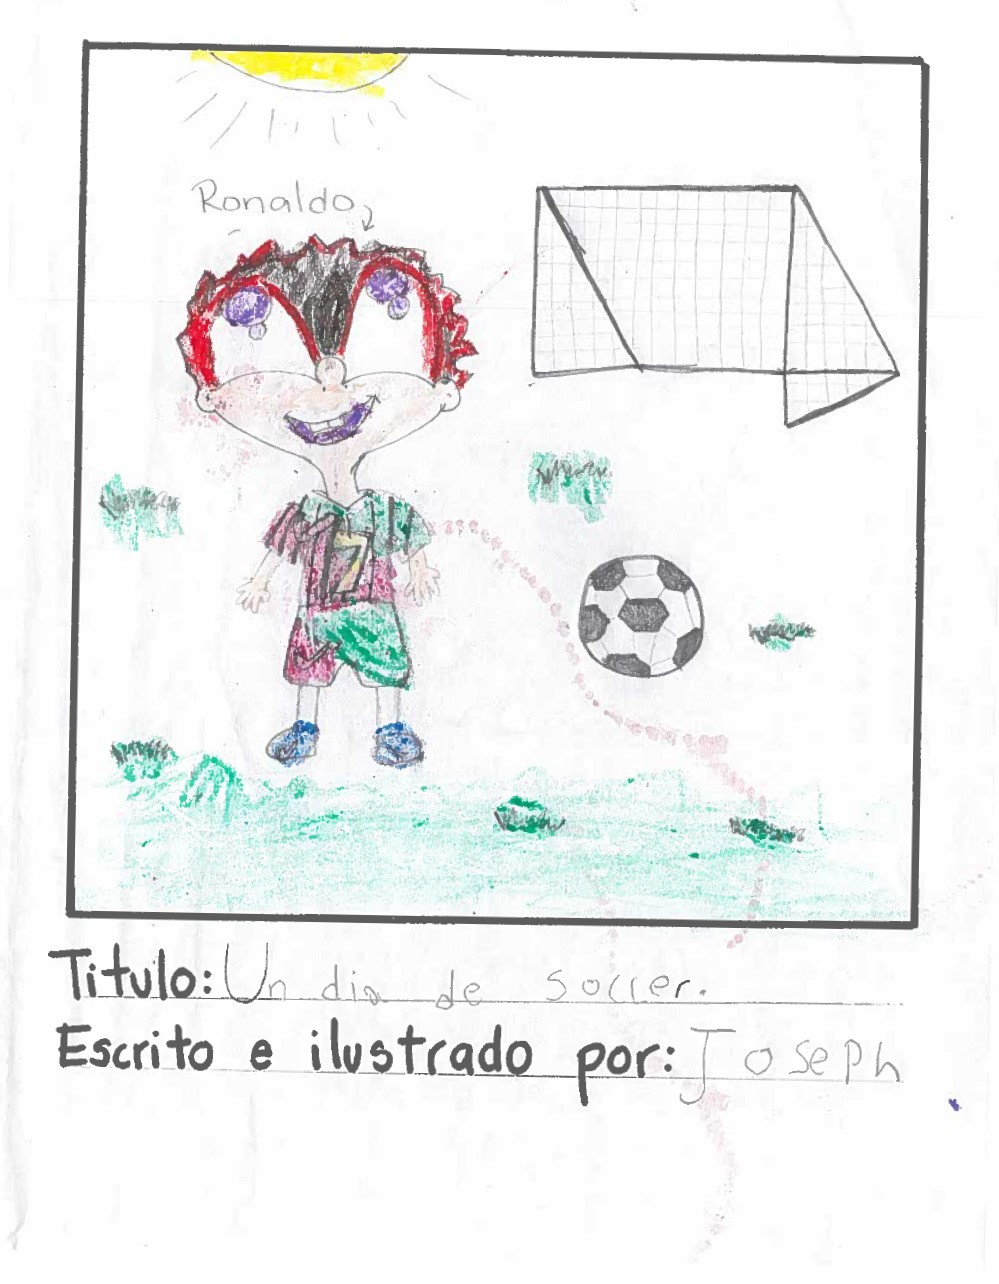 Un Dia de Soccer by Joseph R.